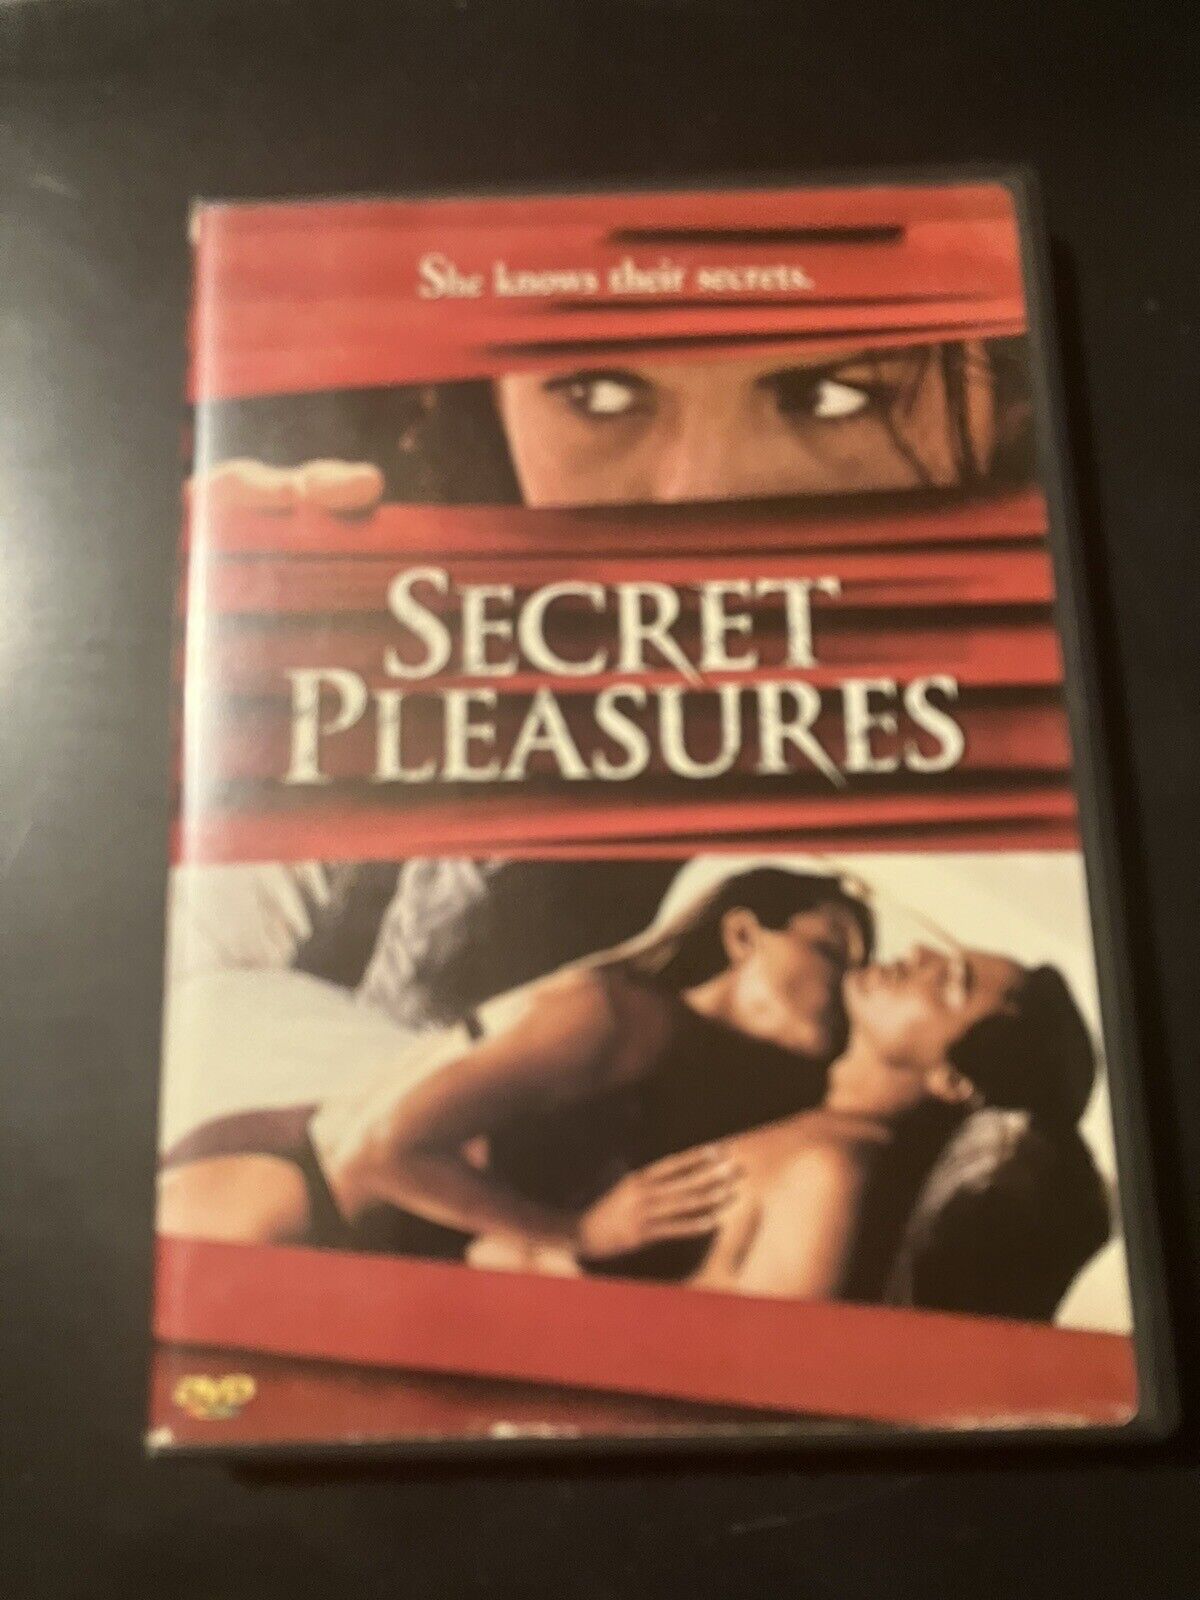 christopher nichols recommends Secret Pleasures Full Movie